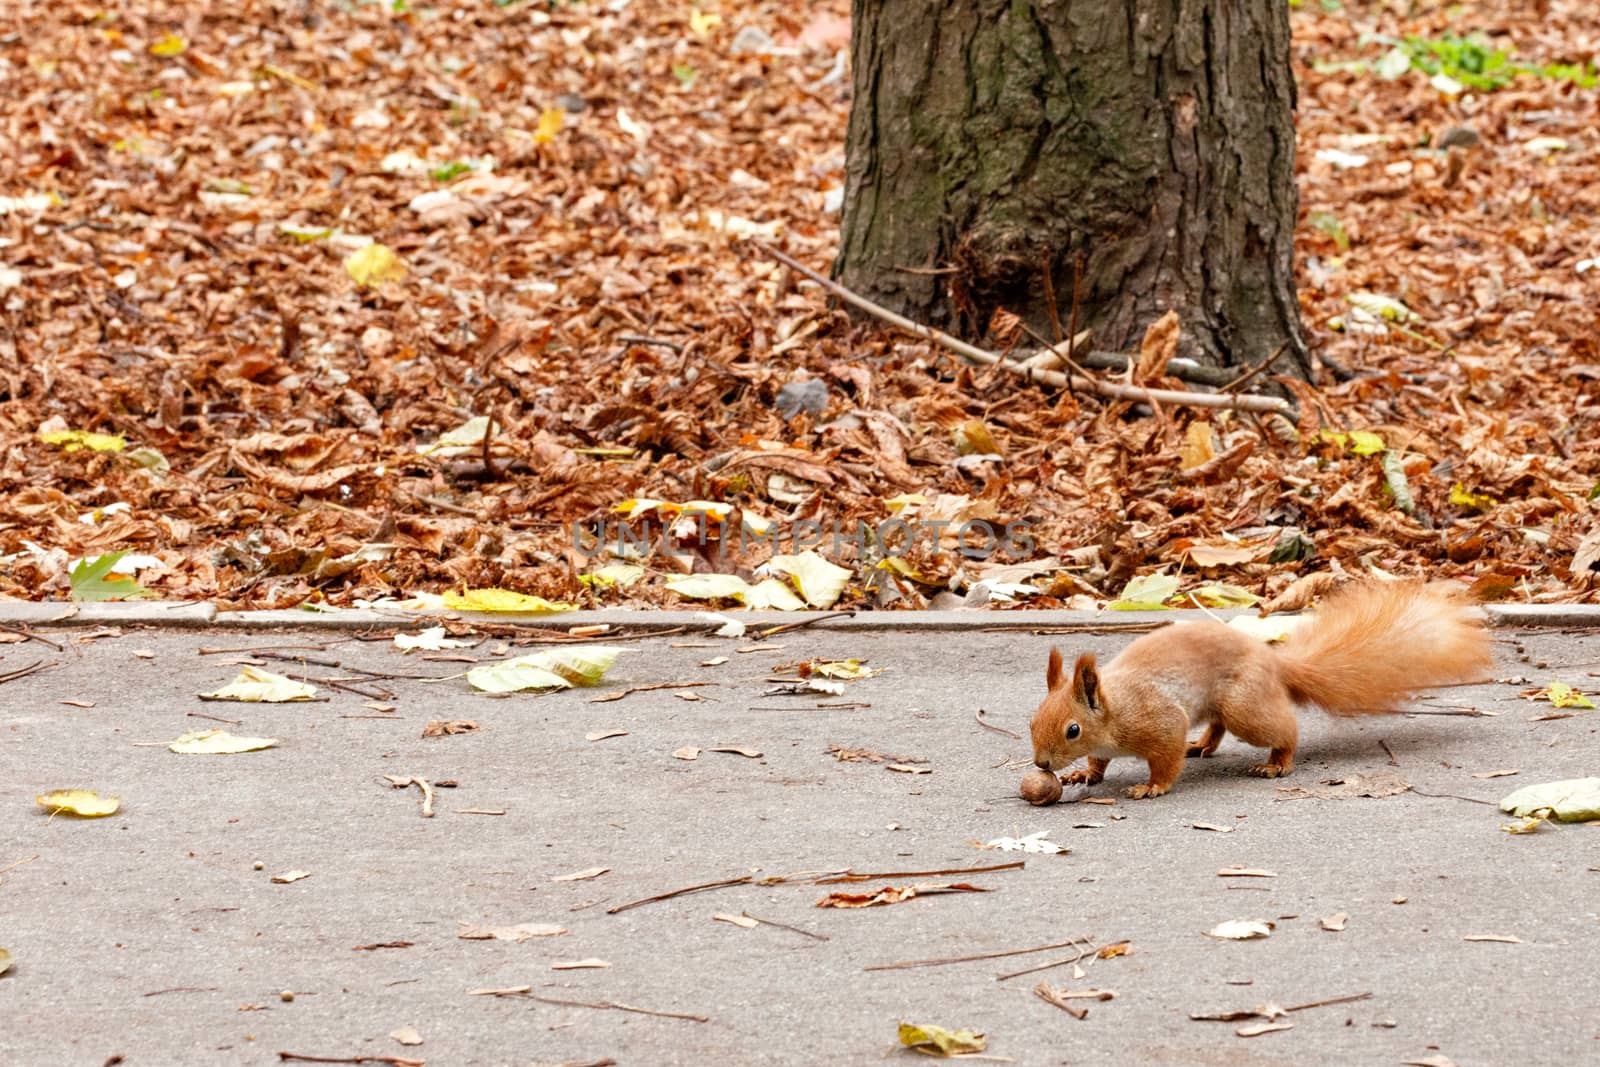 A little orange squirrel finds a walnut while walking along an asphalt path in an autumn park. by Sergii